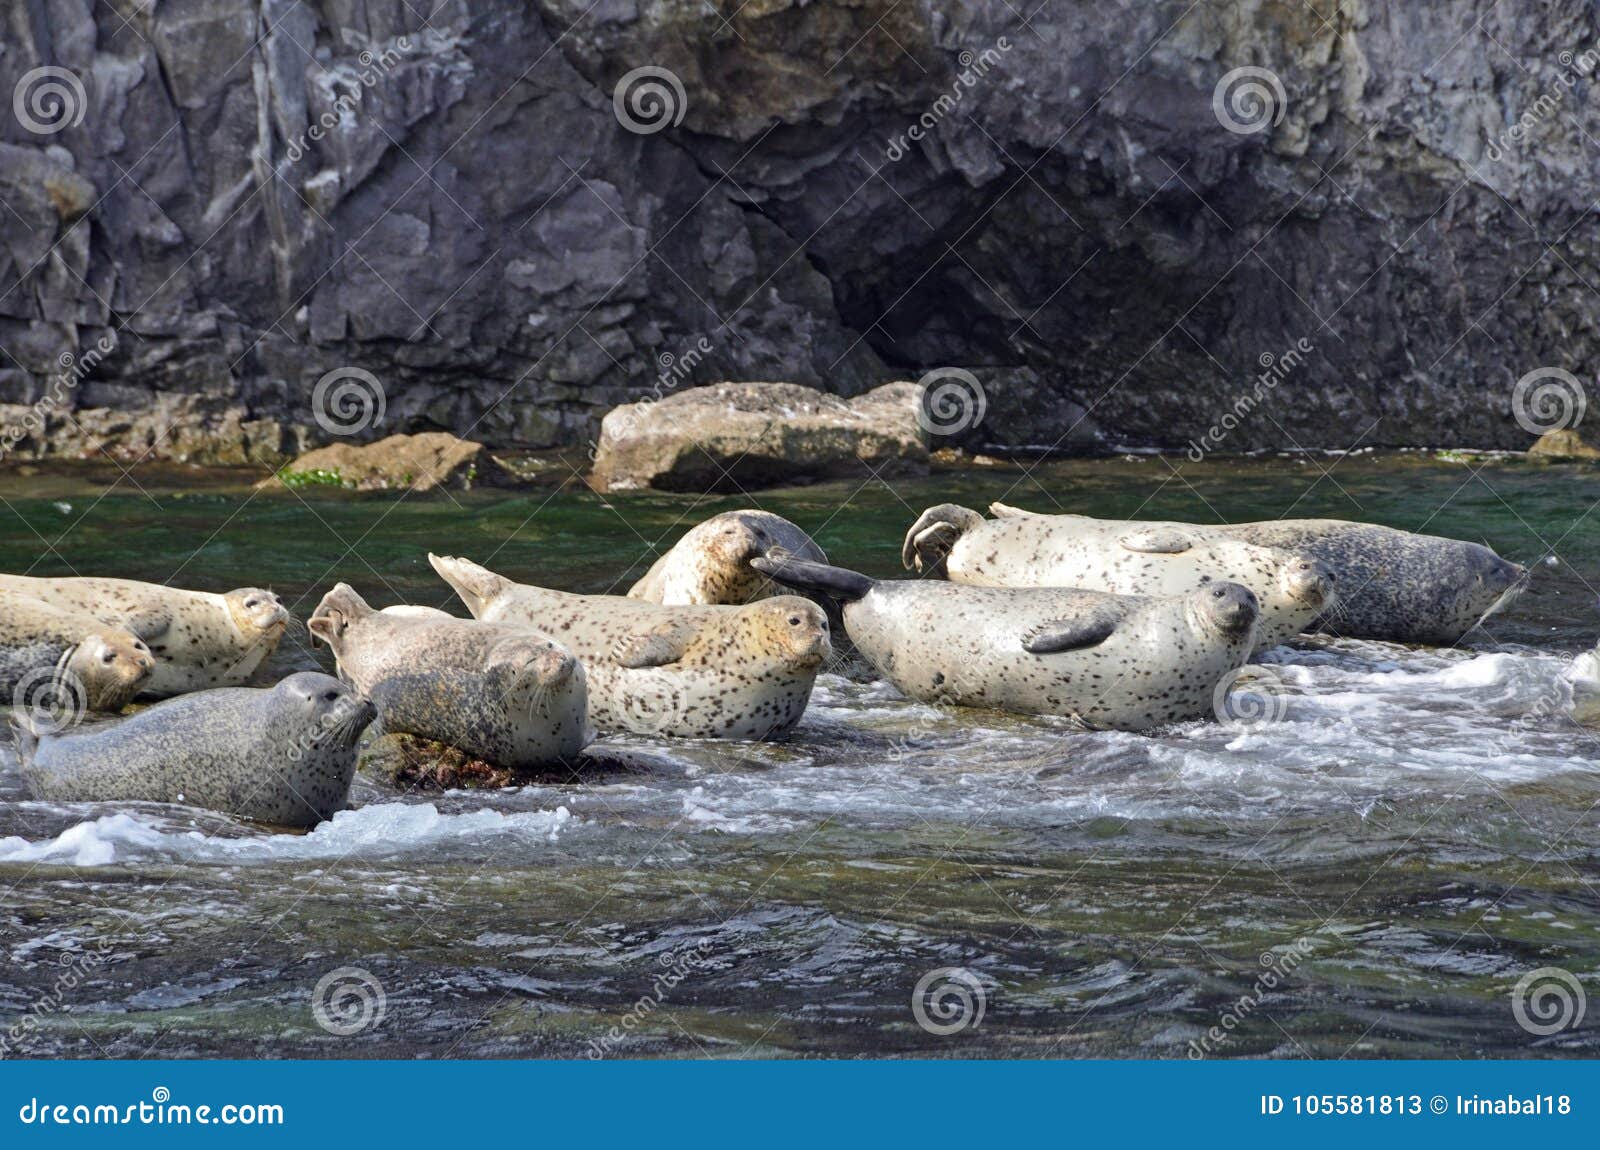 rookery of larga seals on the rocks in the sea of japan. archipelago rimsky korsakov